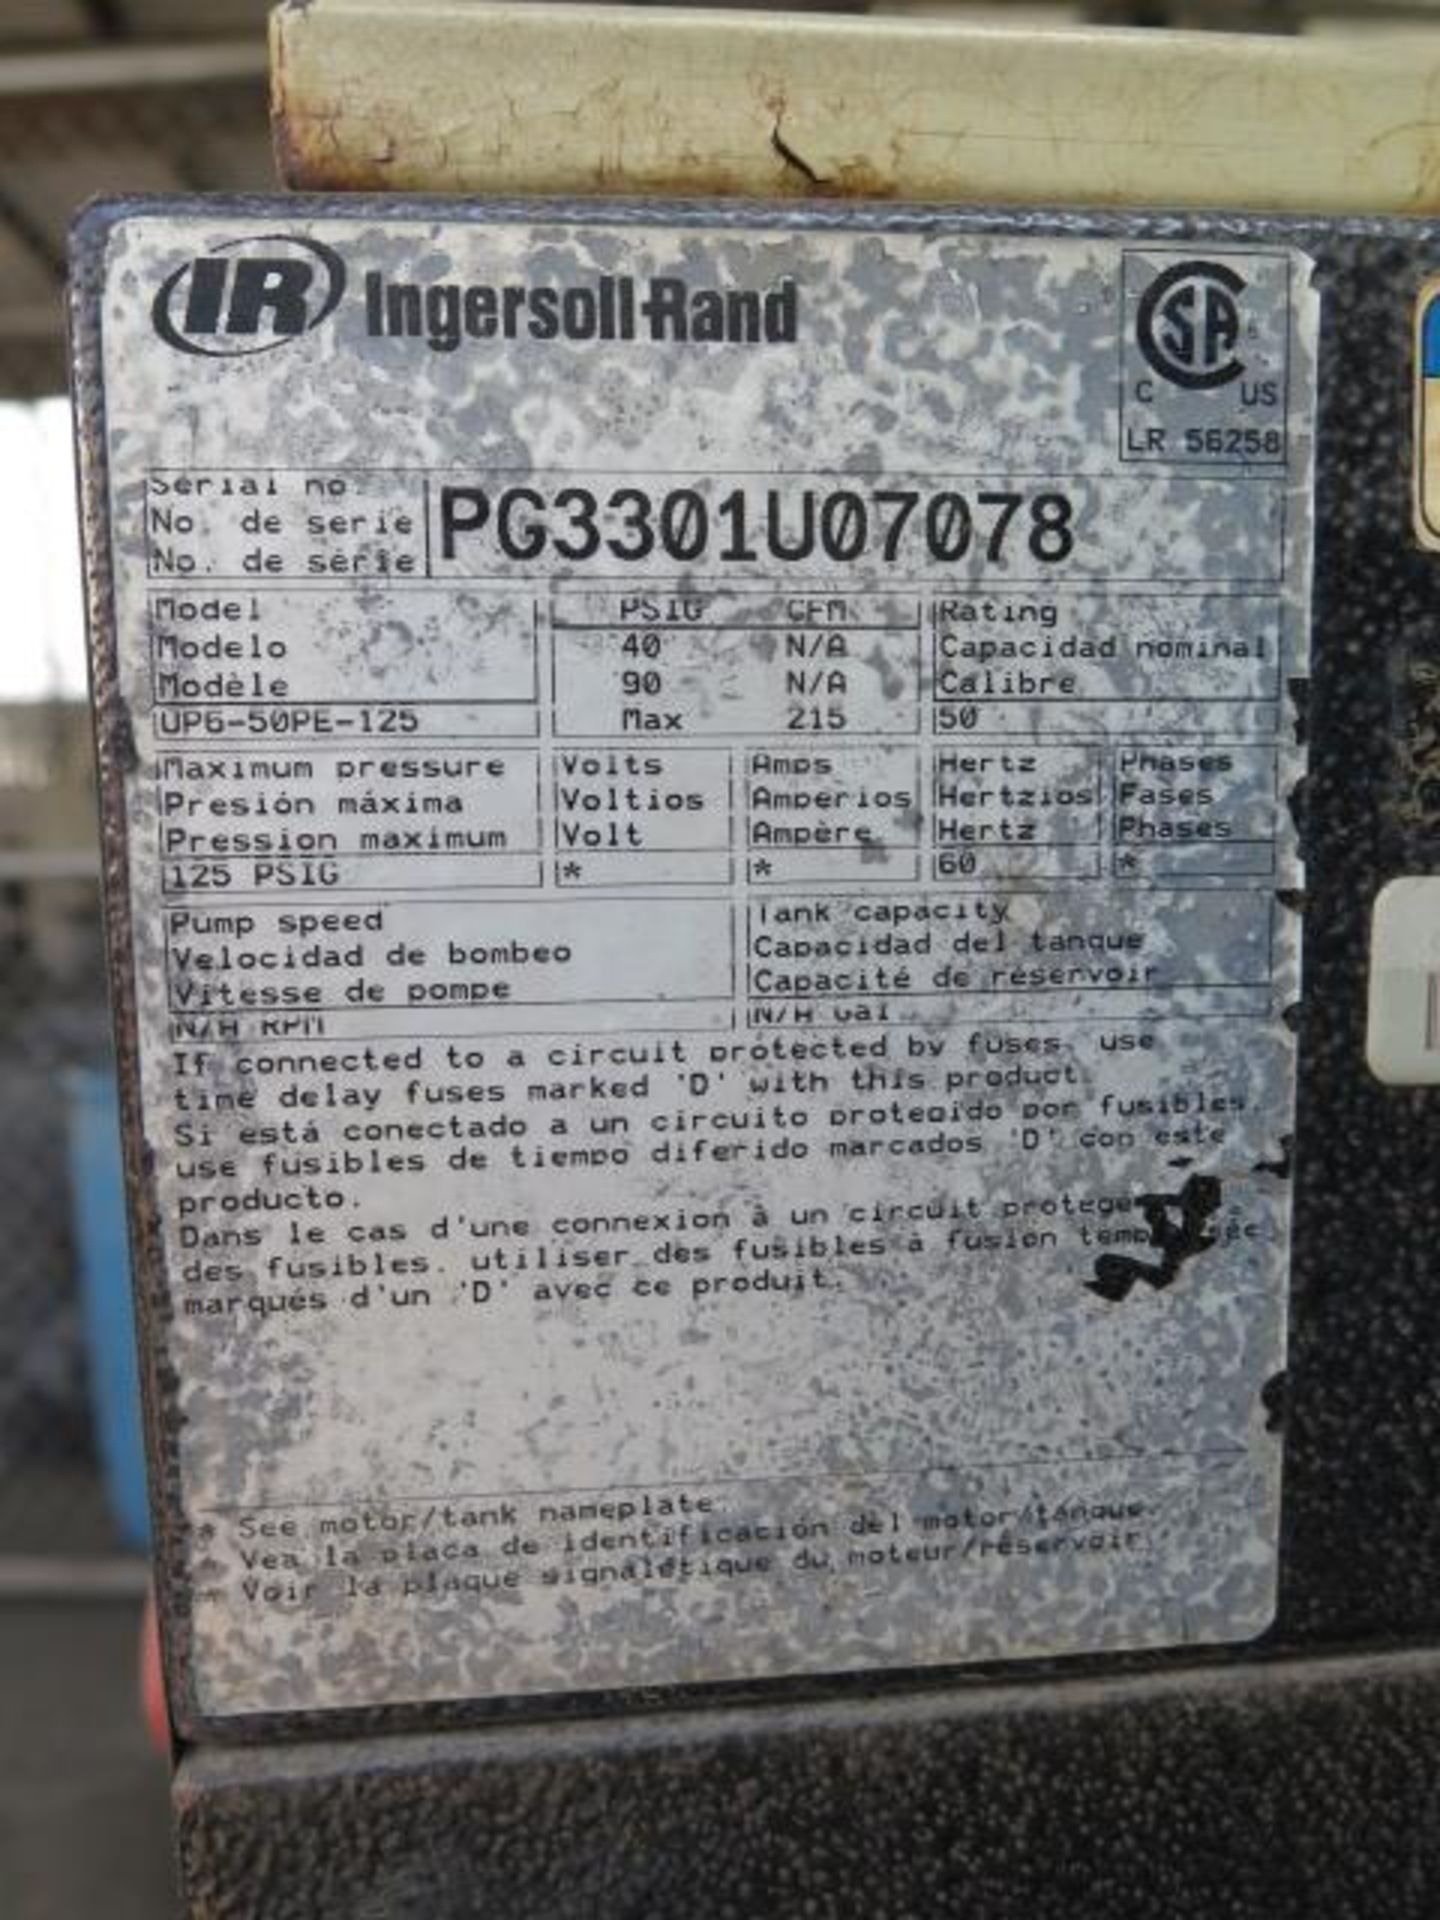 Ingersoll Rand UP6-50PR-125 50Hp Rotary Air Compr s/n PG3301U07078 w/ 215 CFM @ 125 PSIG, SOLD AS IS - Image 8 of 13